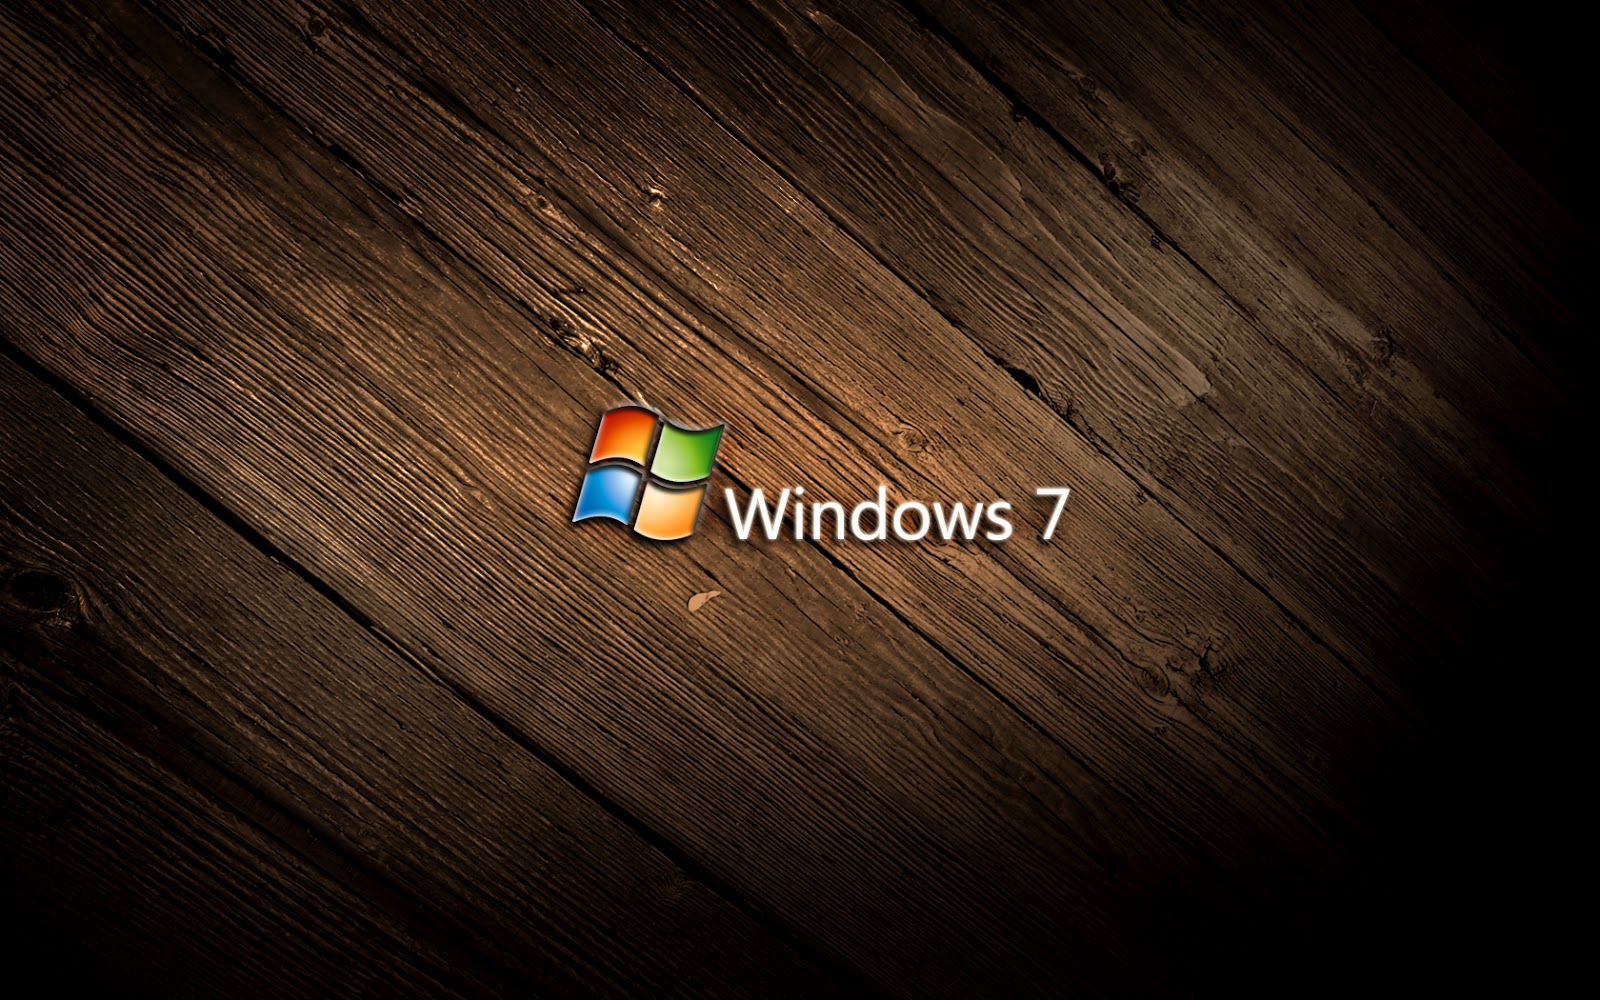 Free Spring Desktop Backgrounds For Windows 7 | HD Pix